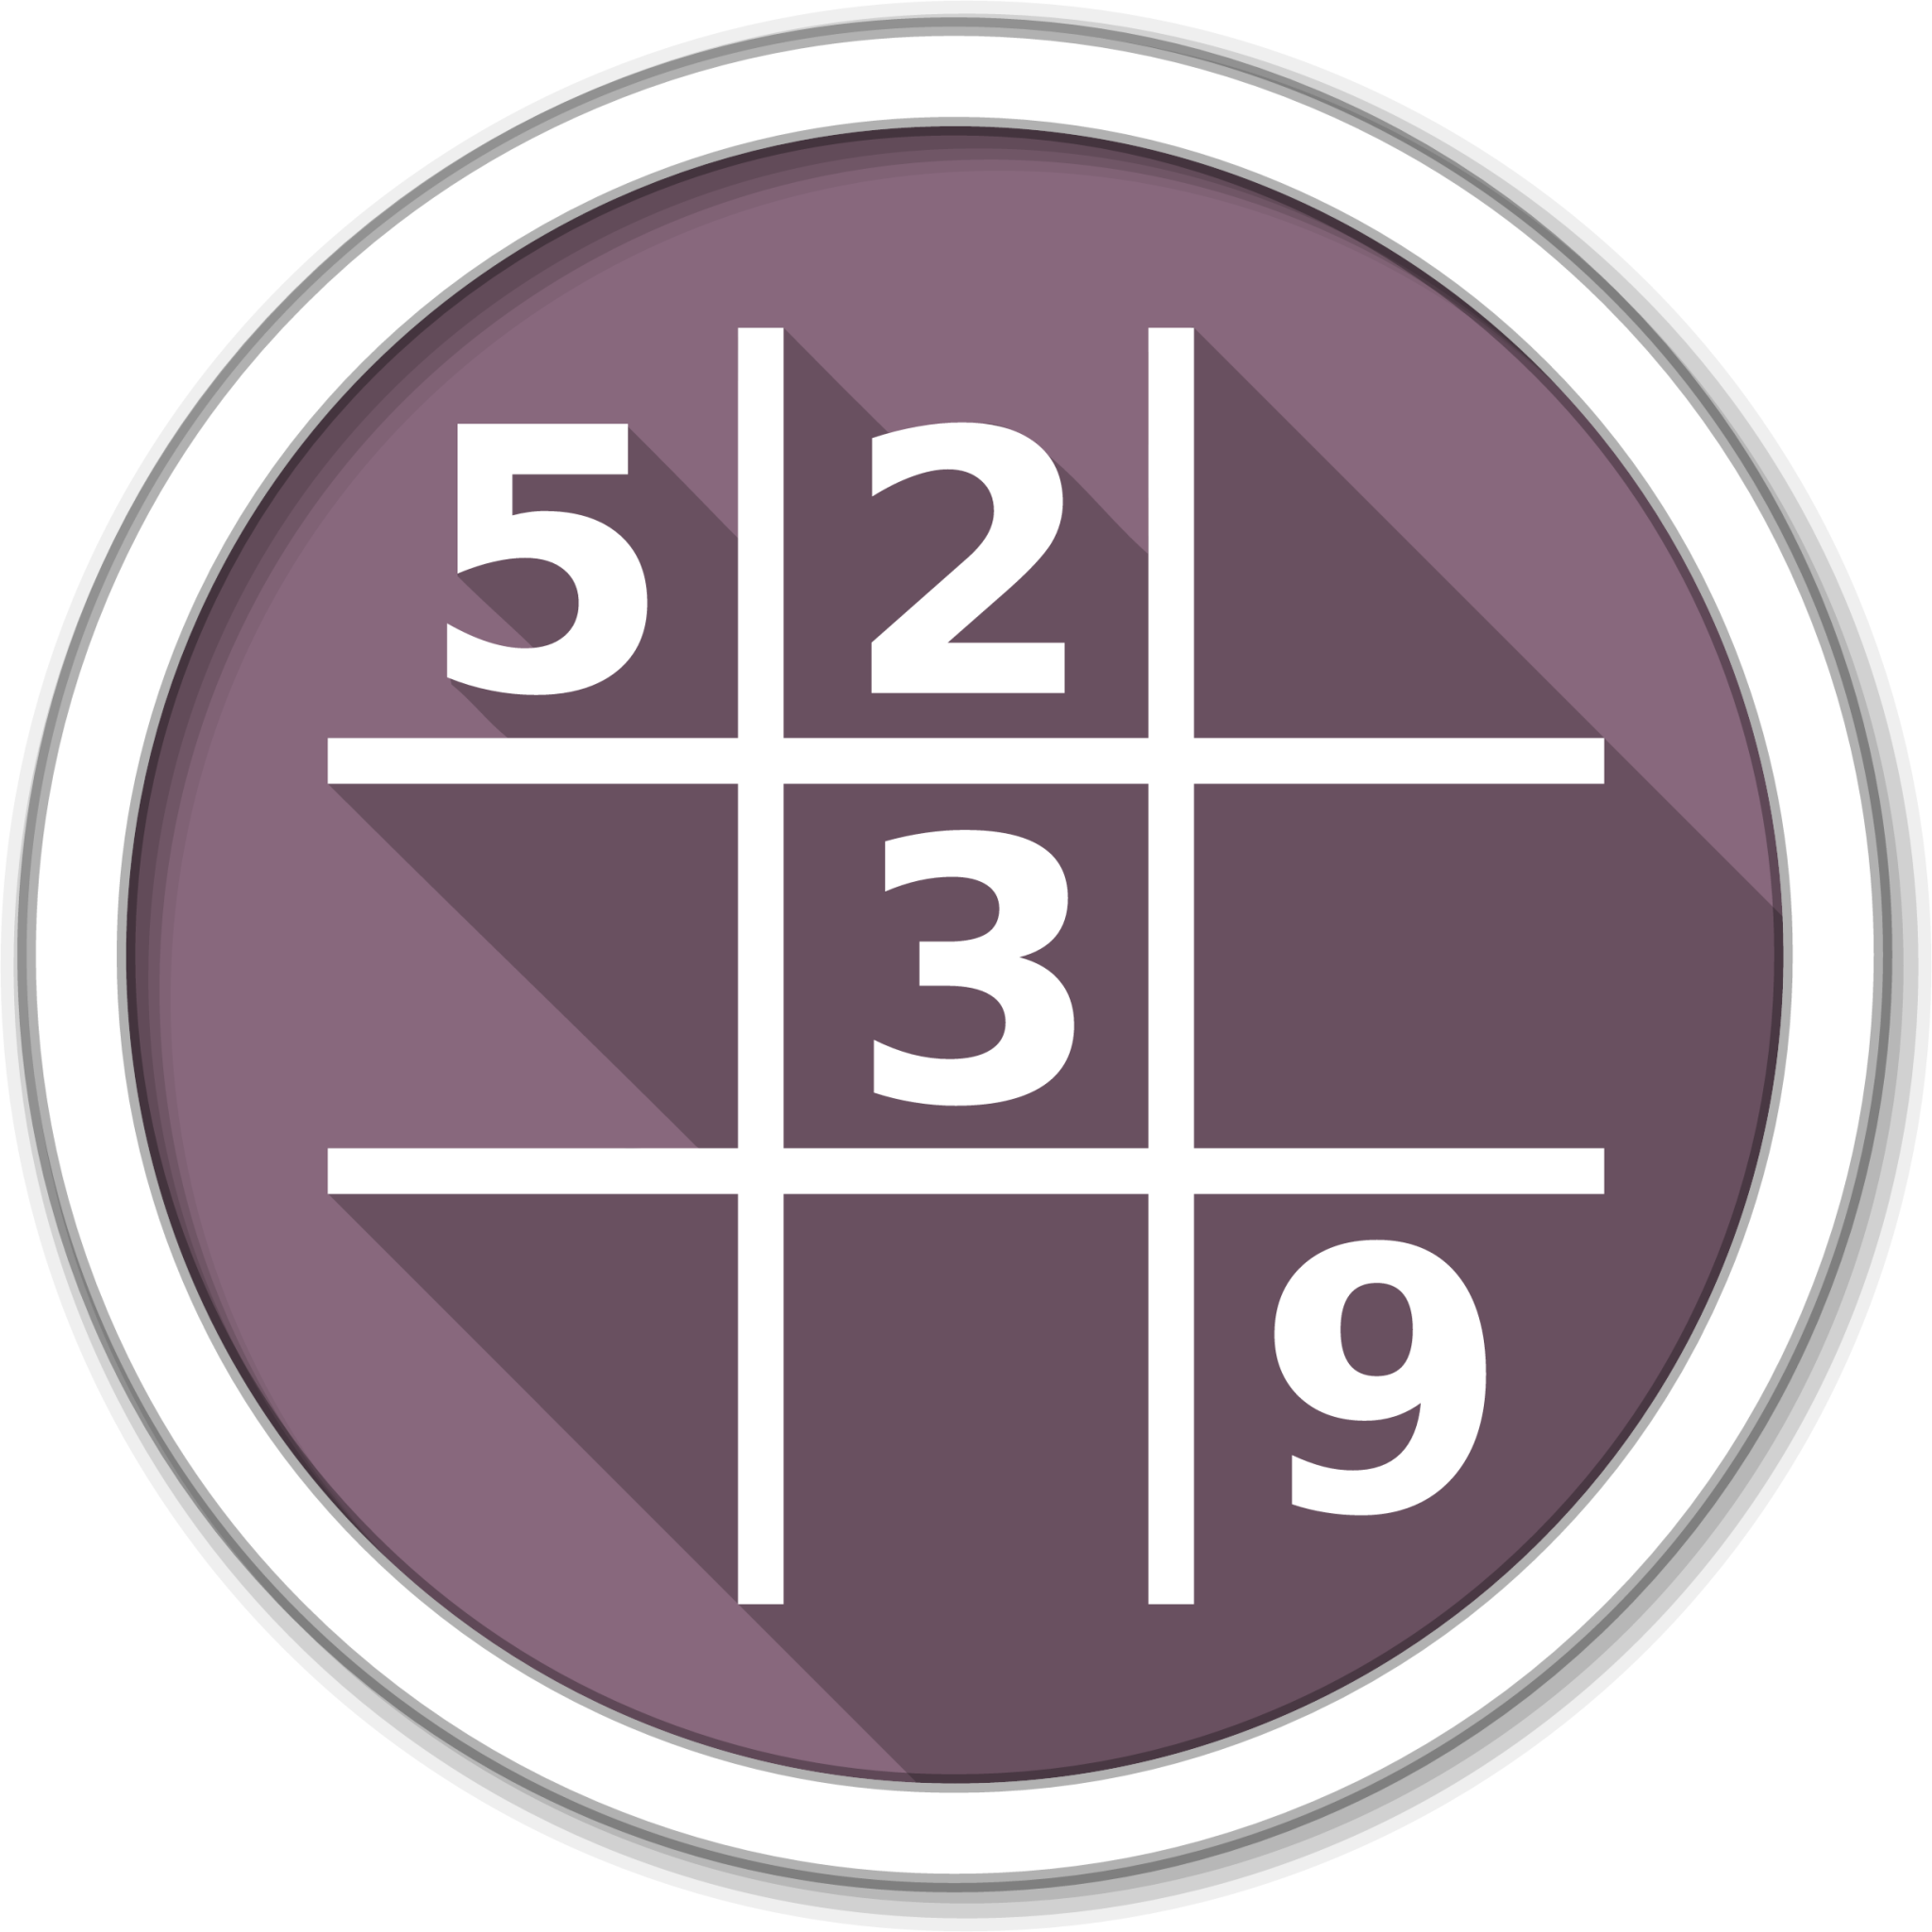 sudoku icon